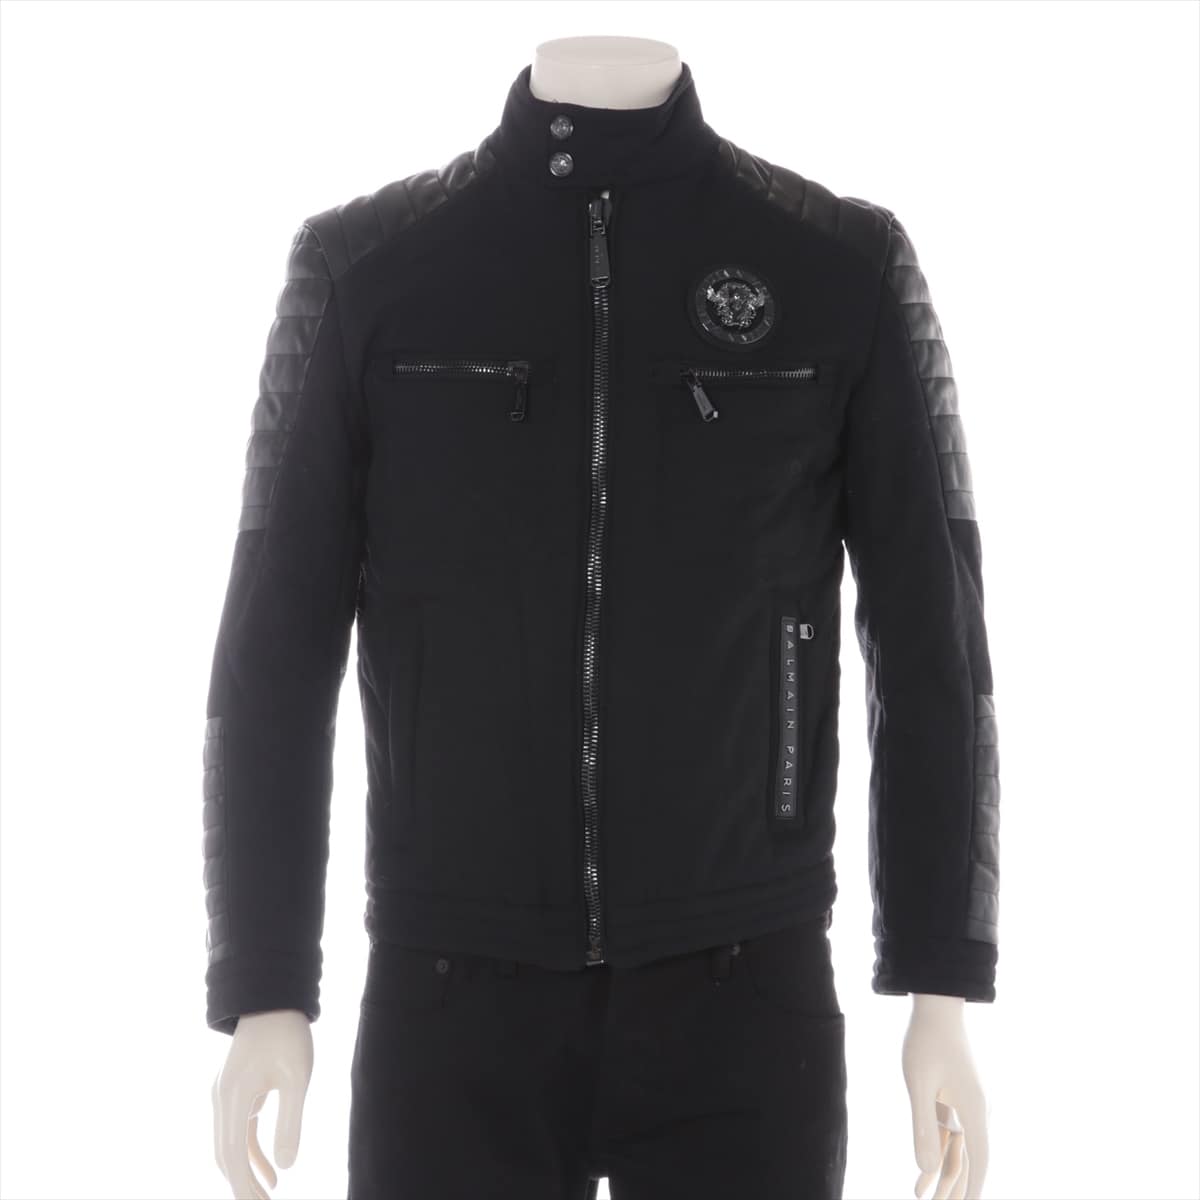 Balmain Nylon Leather jacket 44 Men's Black